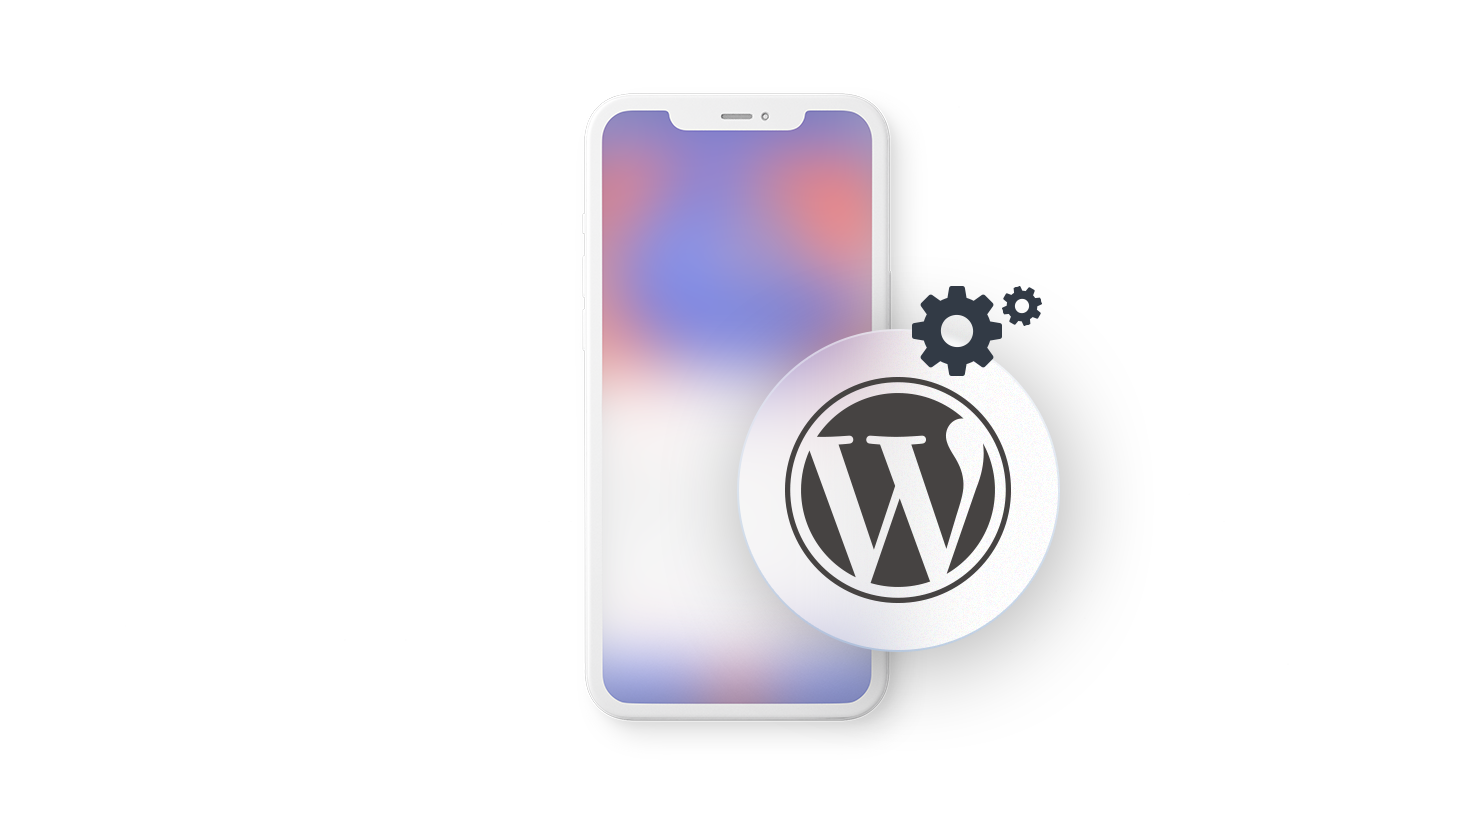 How to Improve WordPress Site Speed on Mobile & Desktop